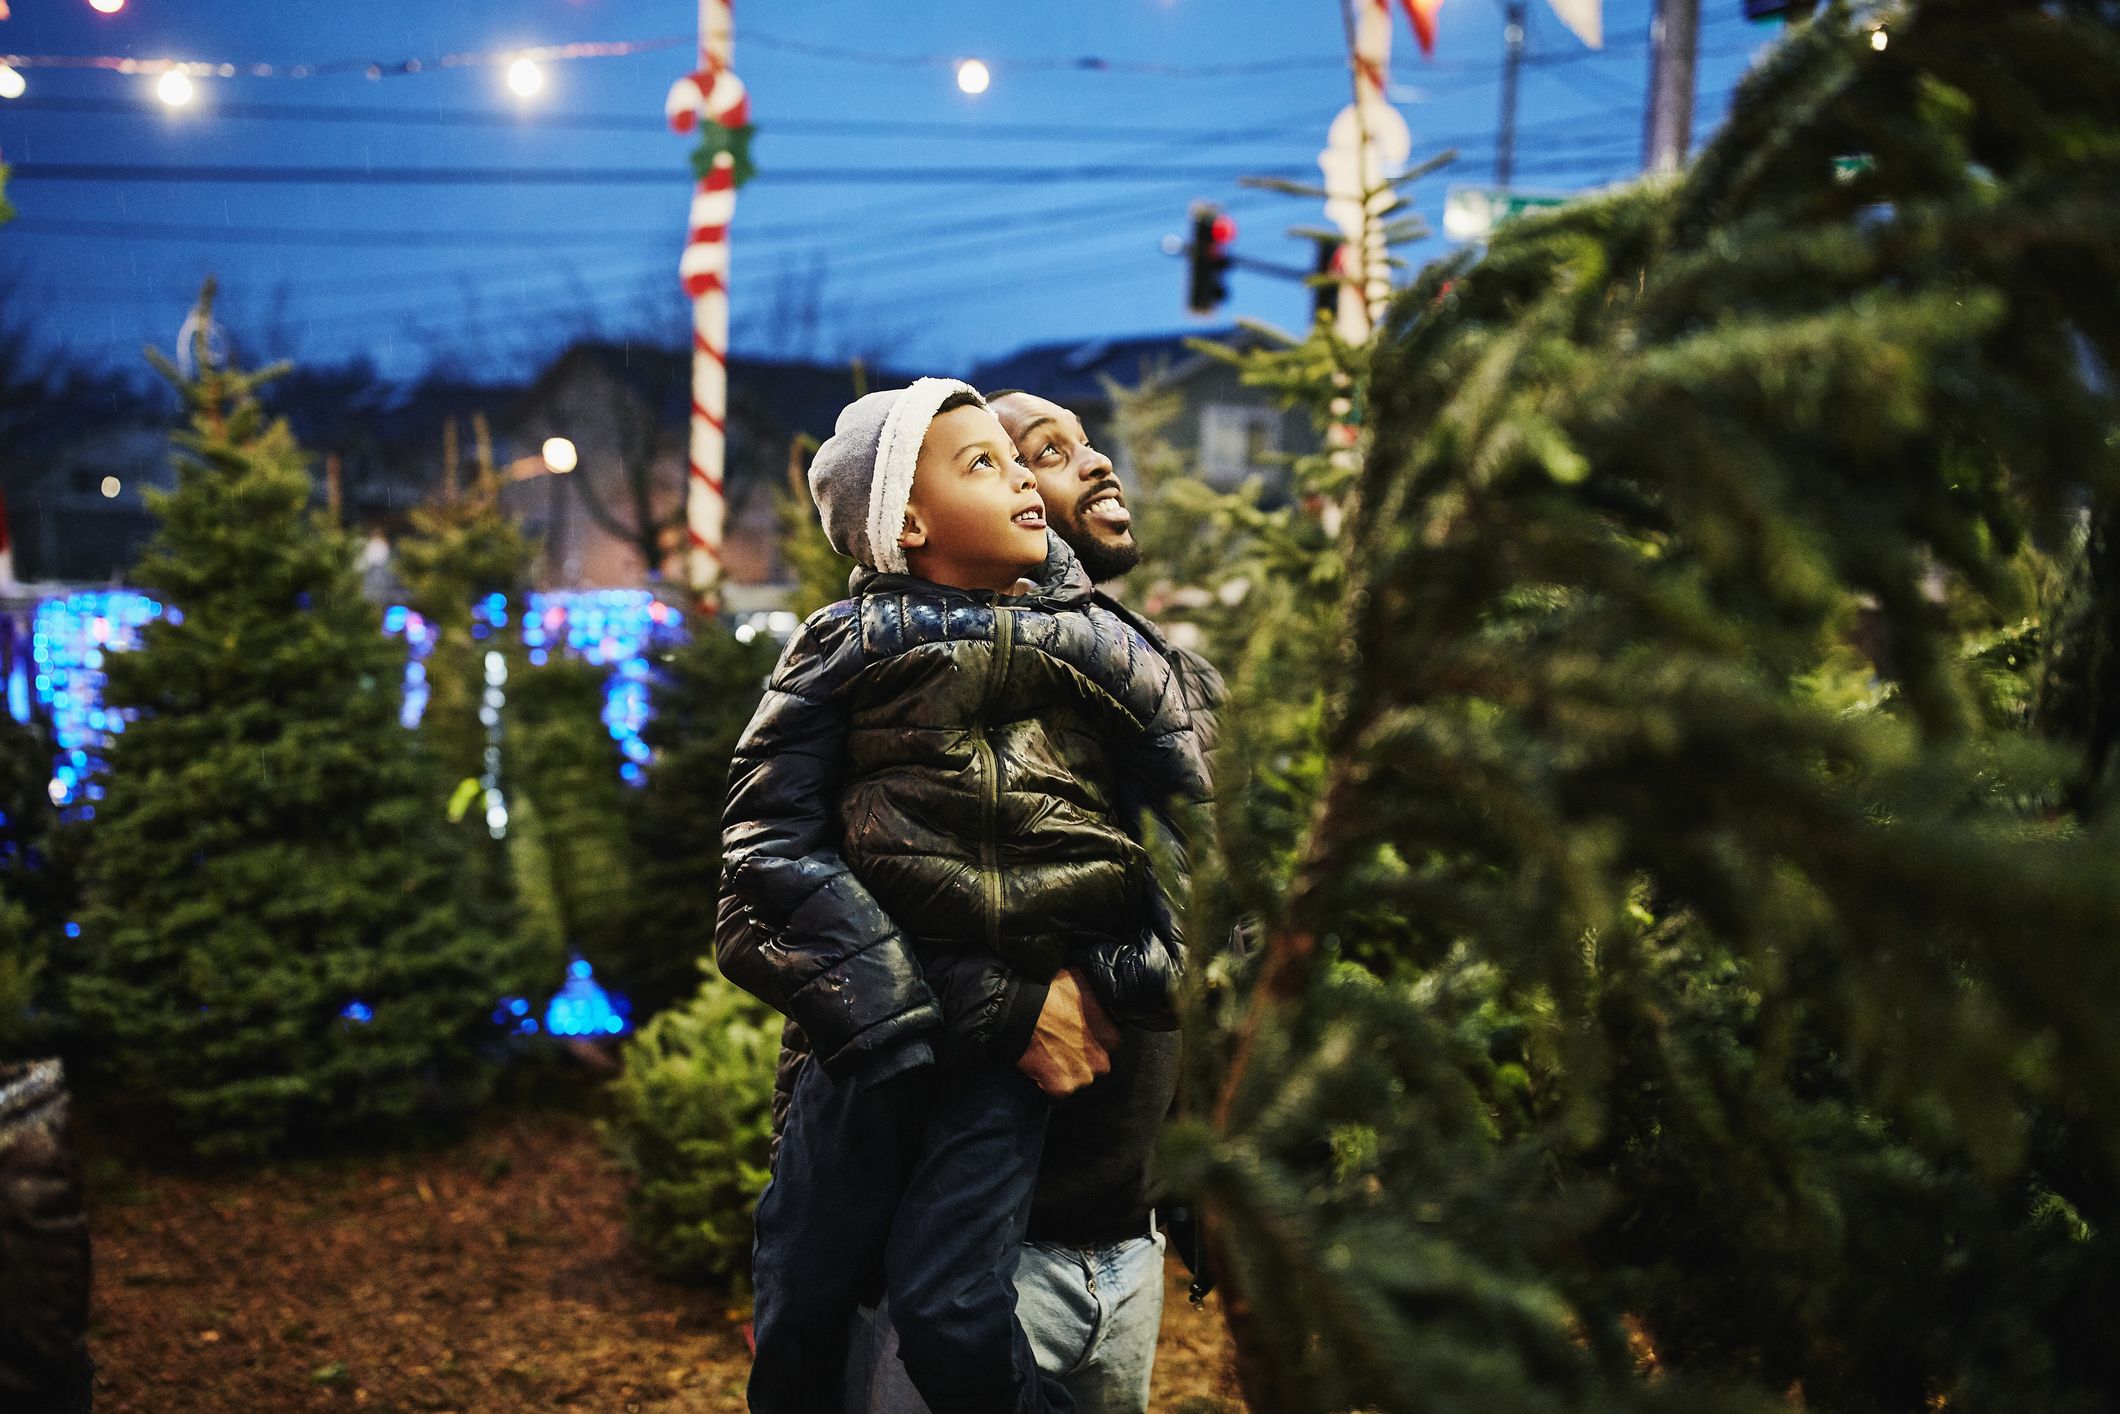 Christmas Tree Farm Family Photos: Samples, Outfit Tips, Posing Ideas -  Redmond Family Photographer